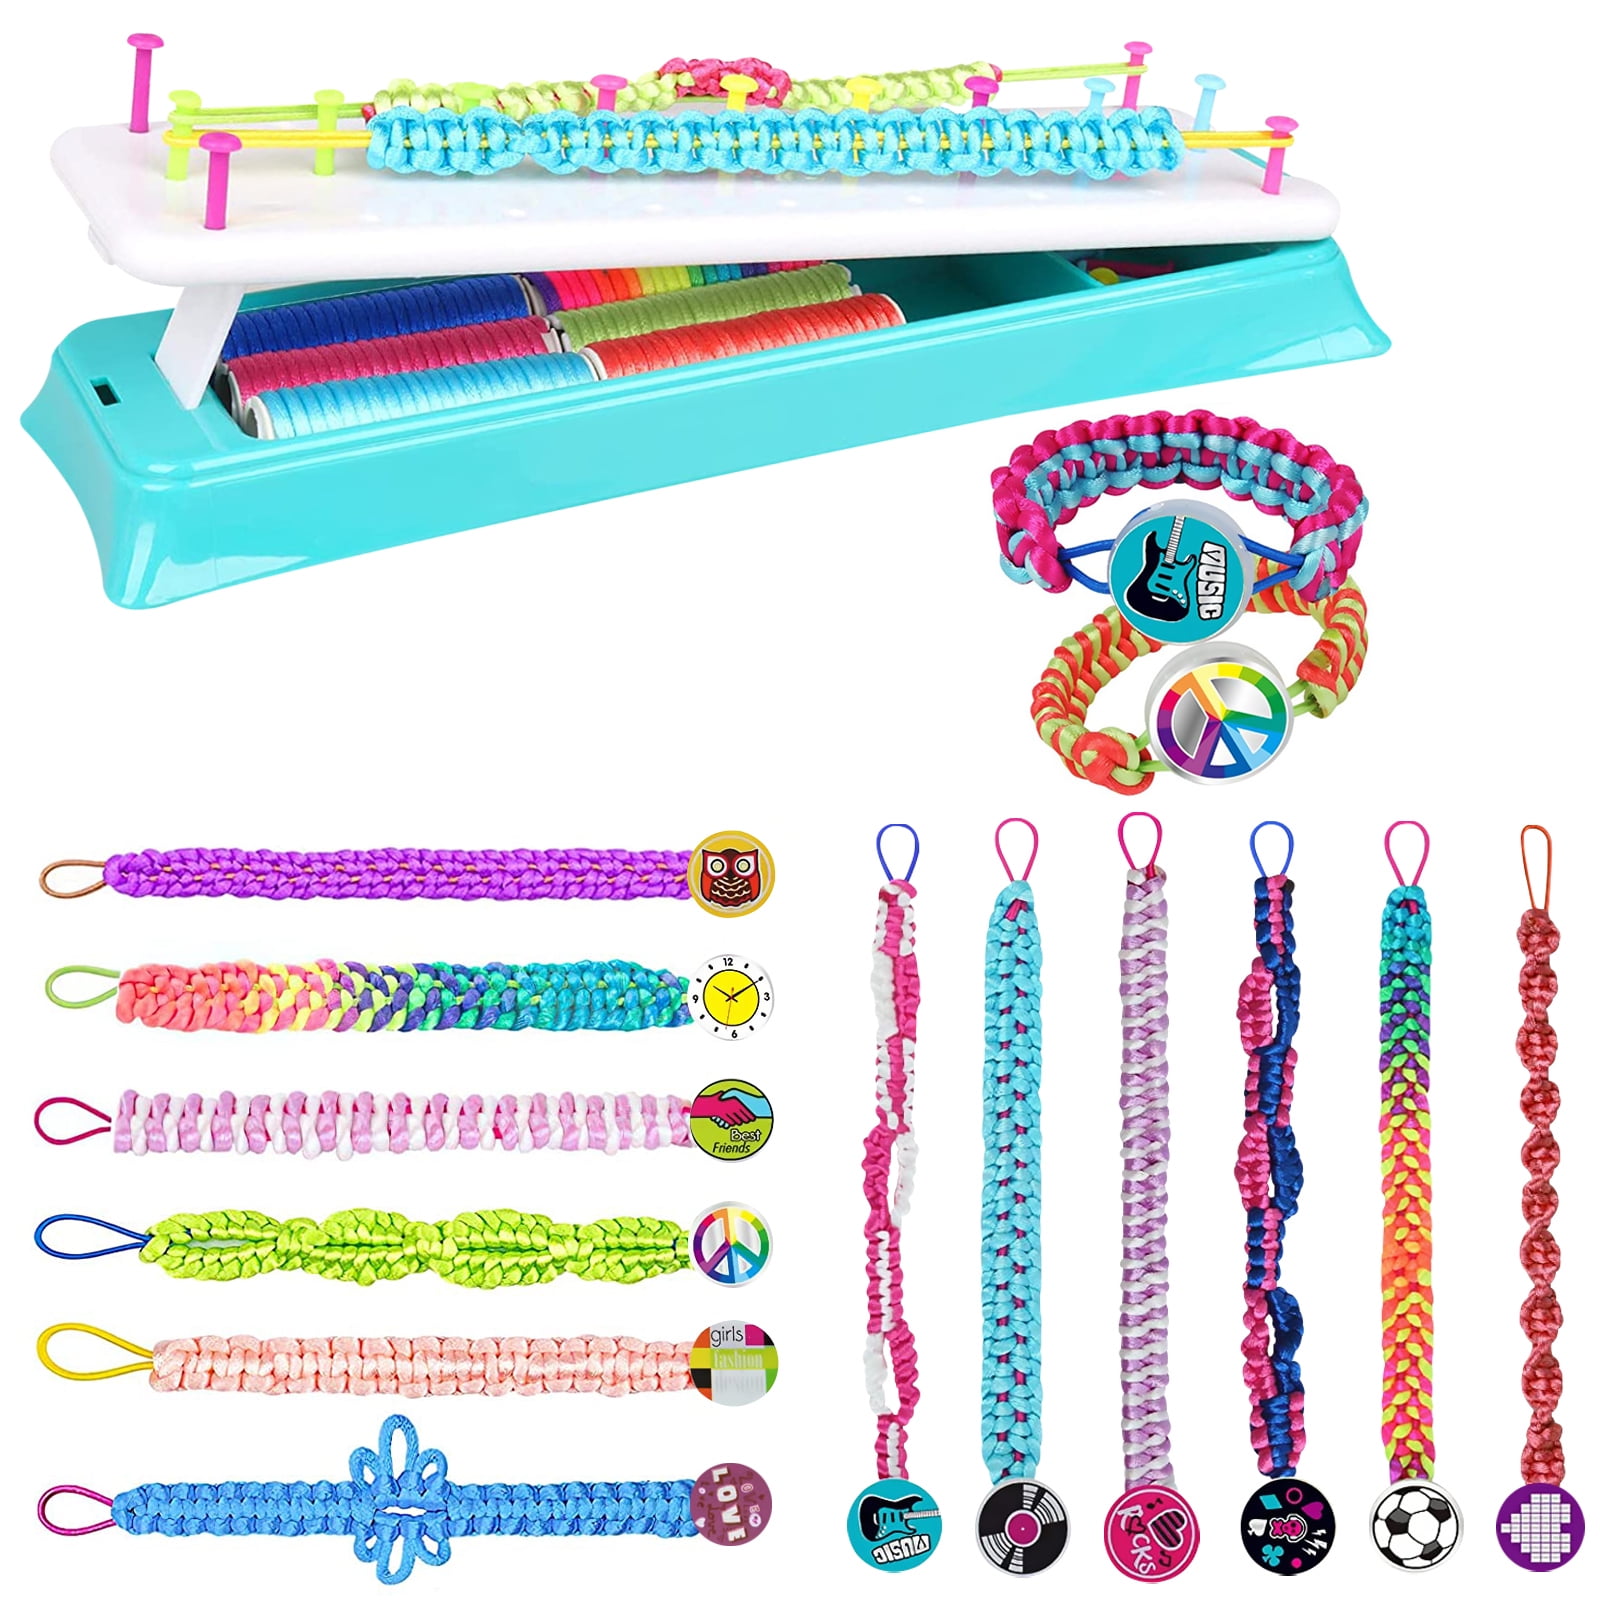 Friendship Bracelet Making Kit,Arts and Crafts for Kids Ages 8-12